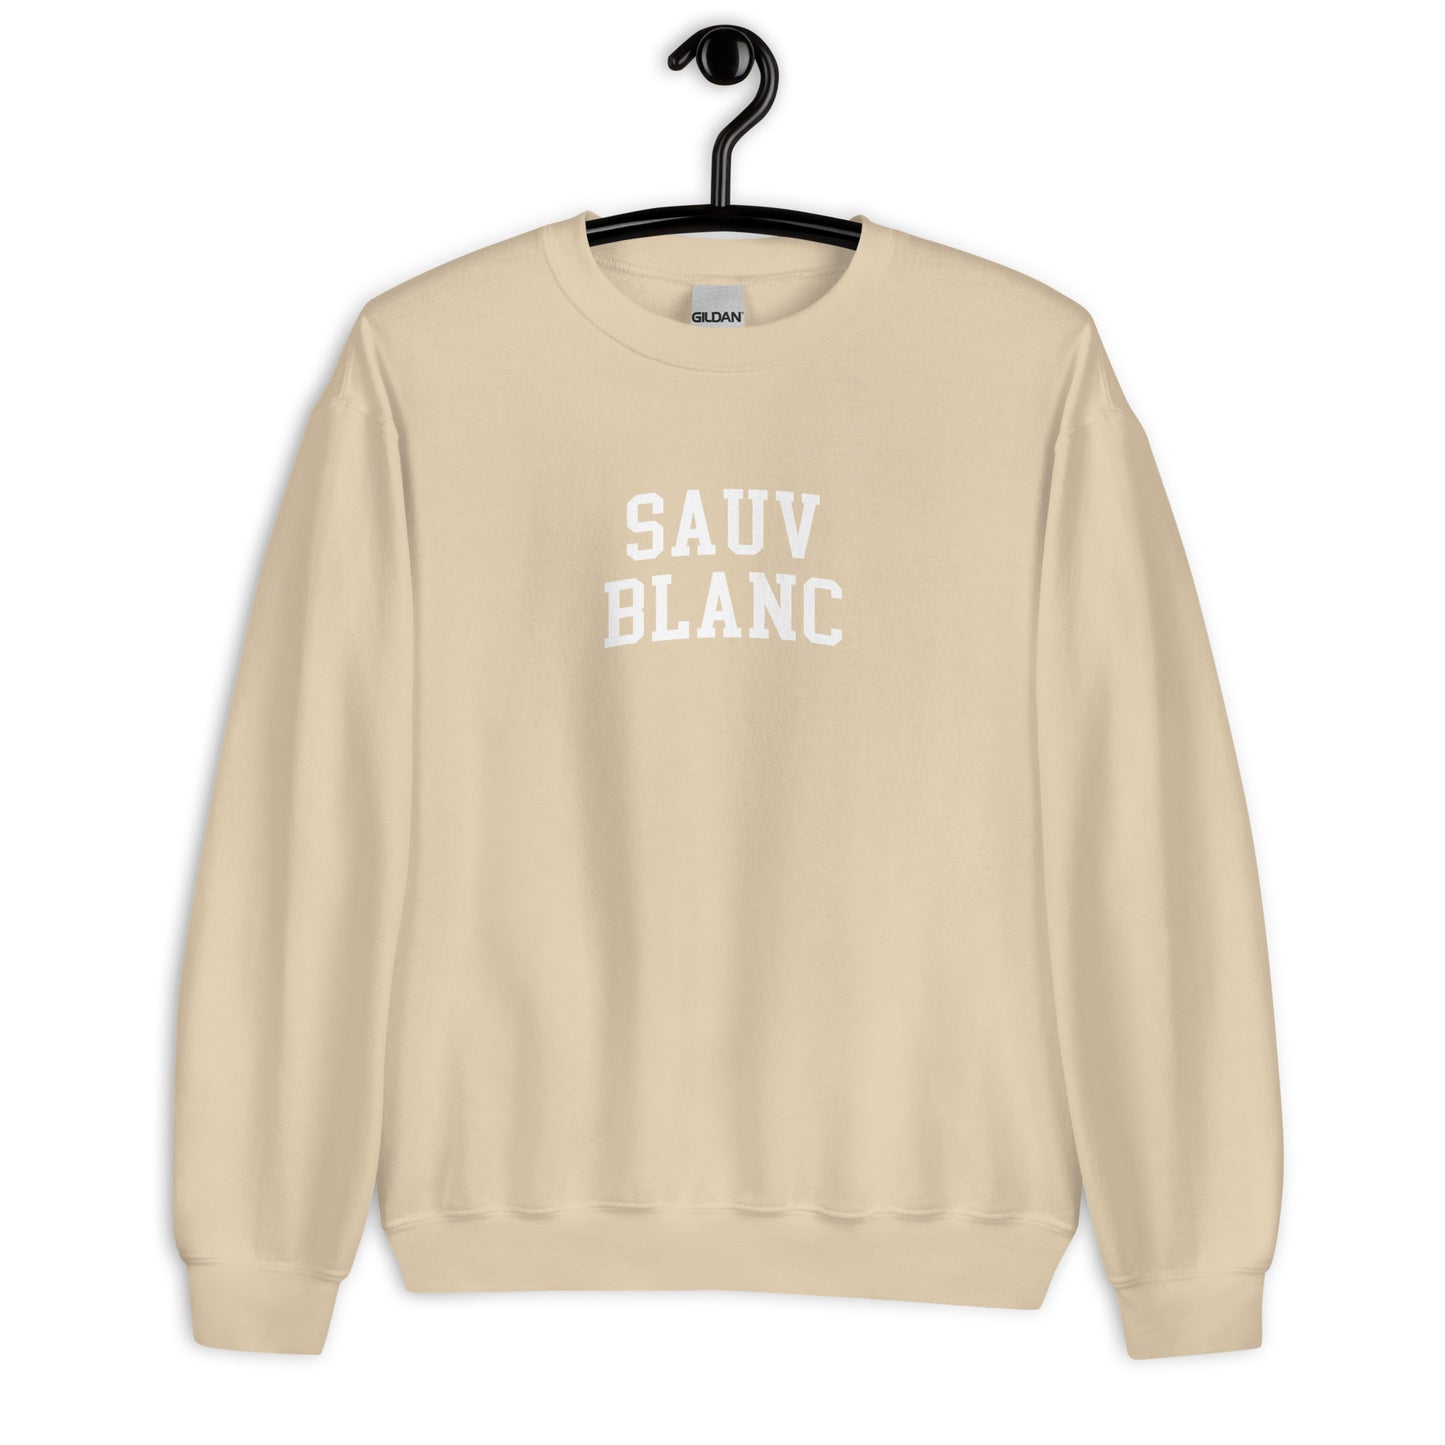 Sauv Blanc Sweatshirt - Arched Font